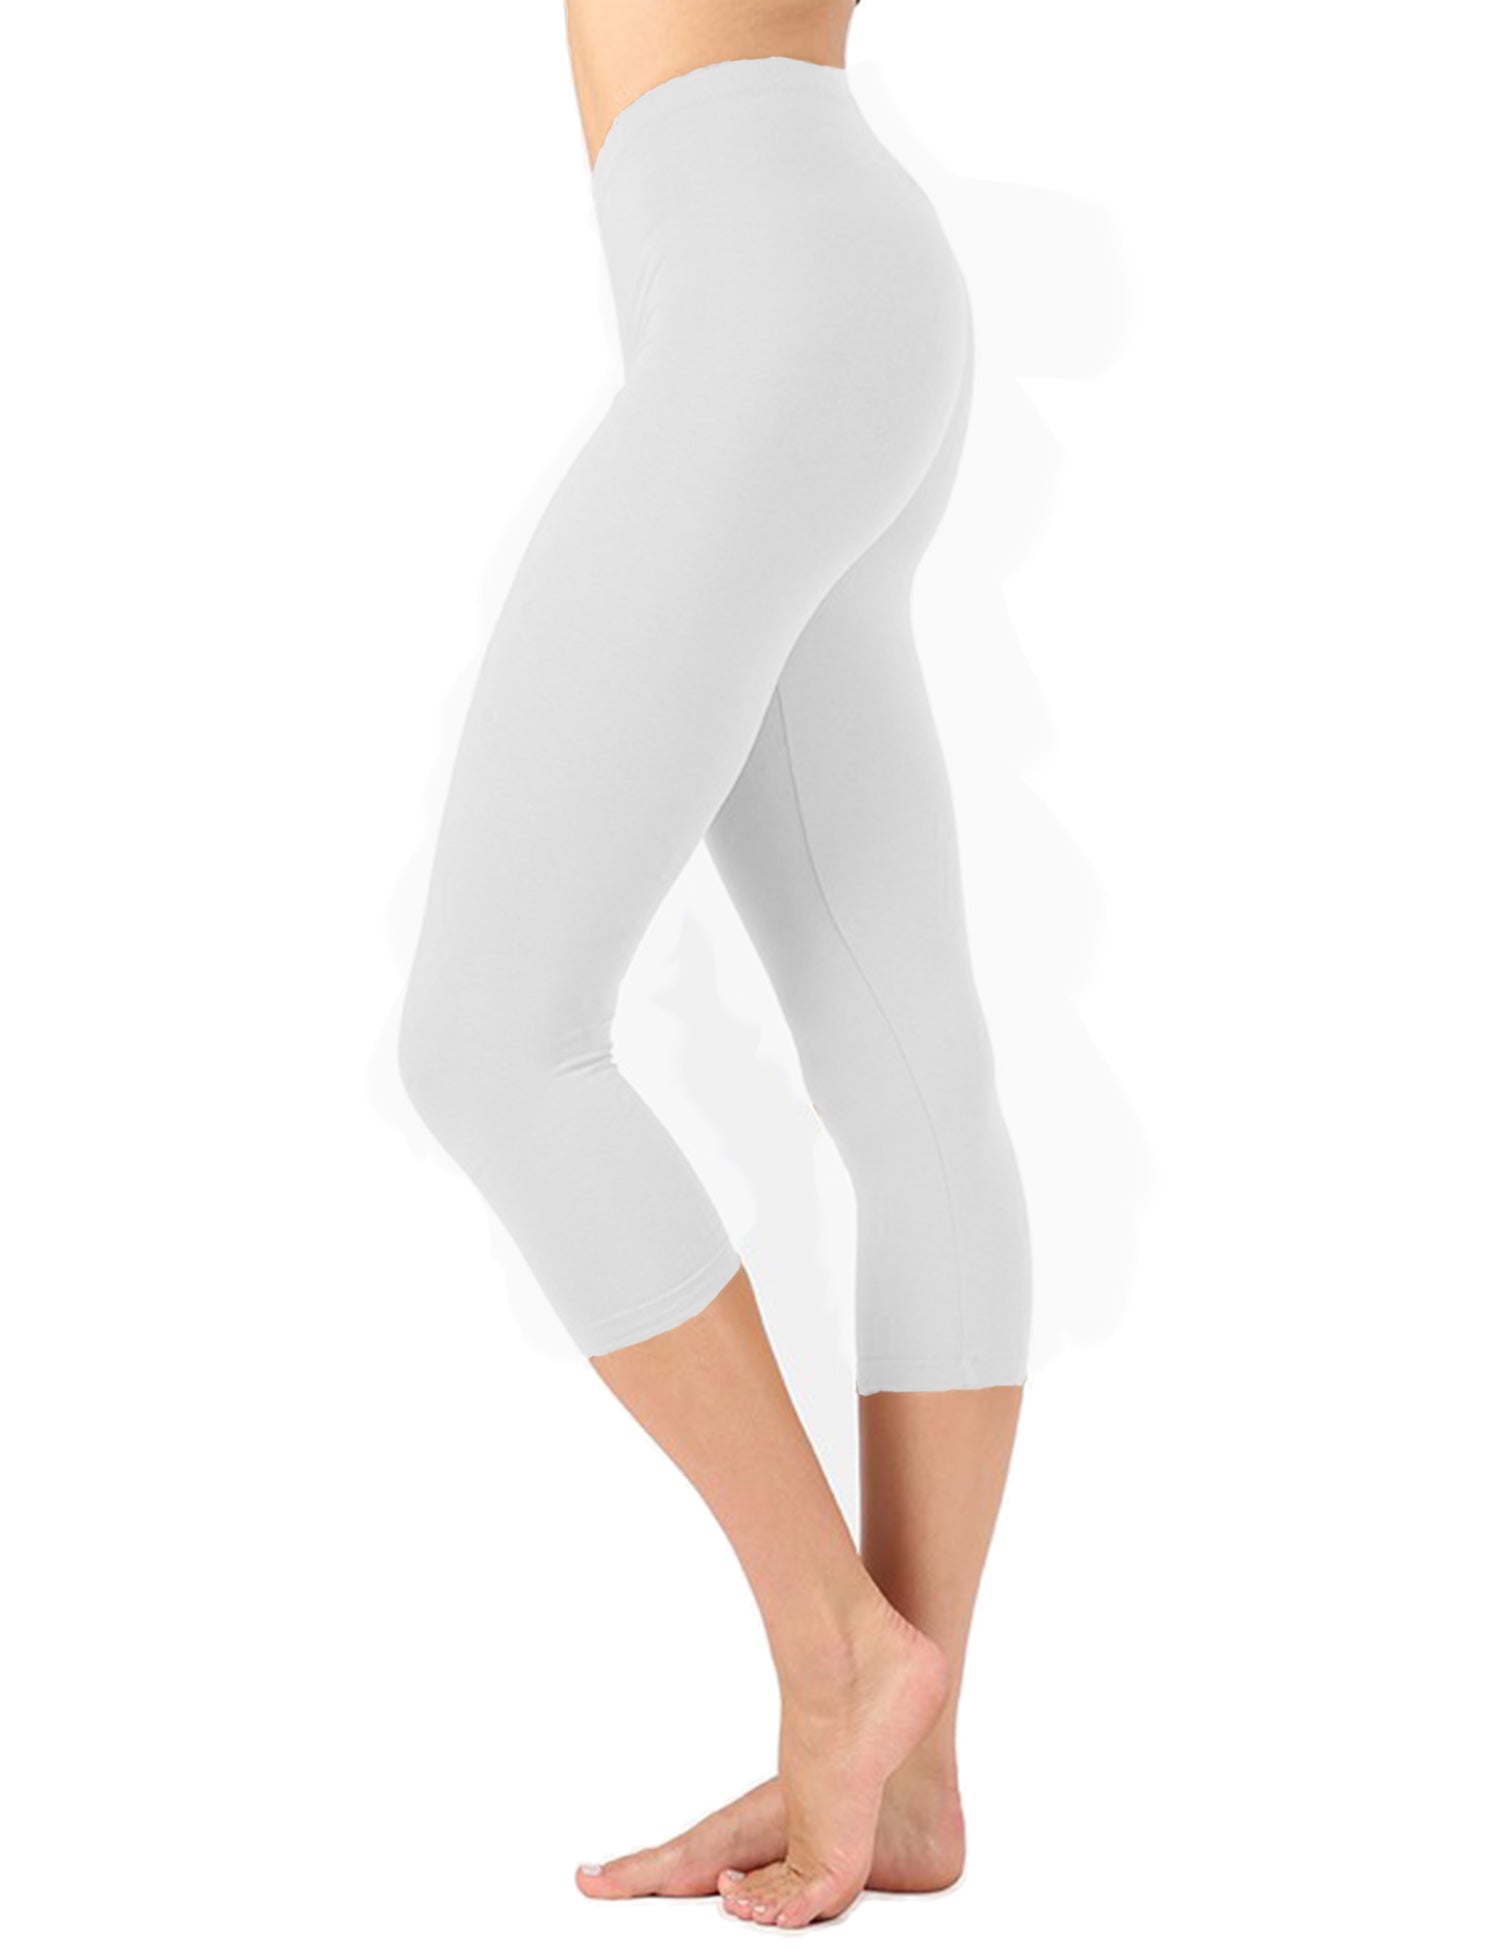 Buy Fablab Capri Leggings 3/4th Pants for Girls|Ladies| Women  (Capri_CLS_190-5-4BePuPWB,Free Size,BeigePurplePinkWhiteBlack) at Amazon.in